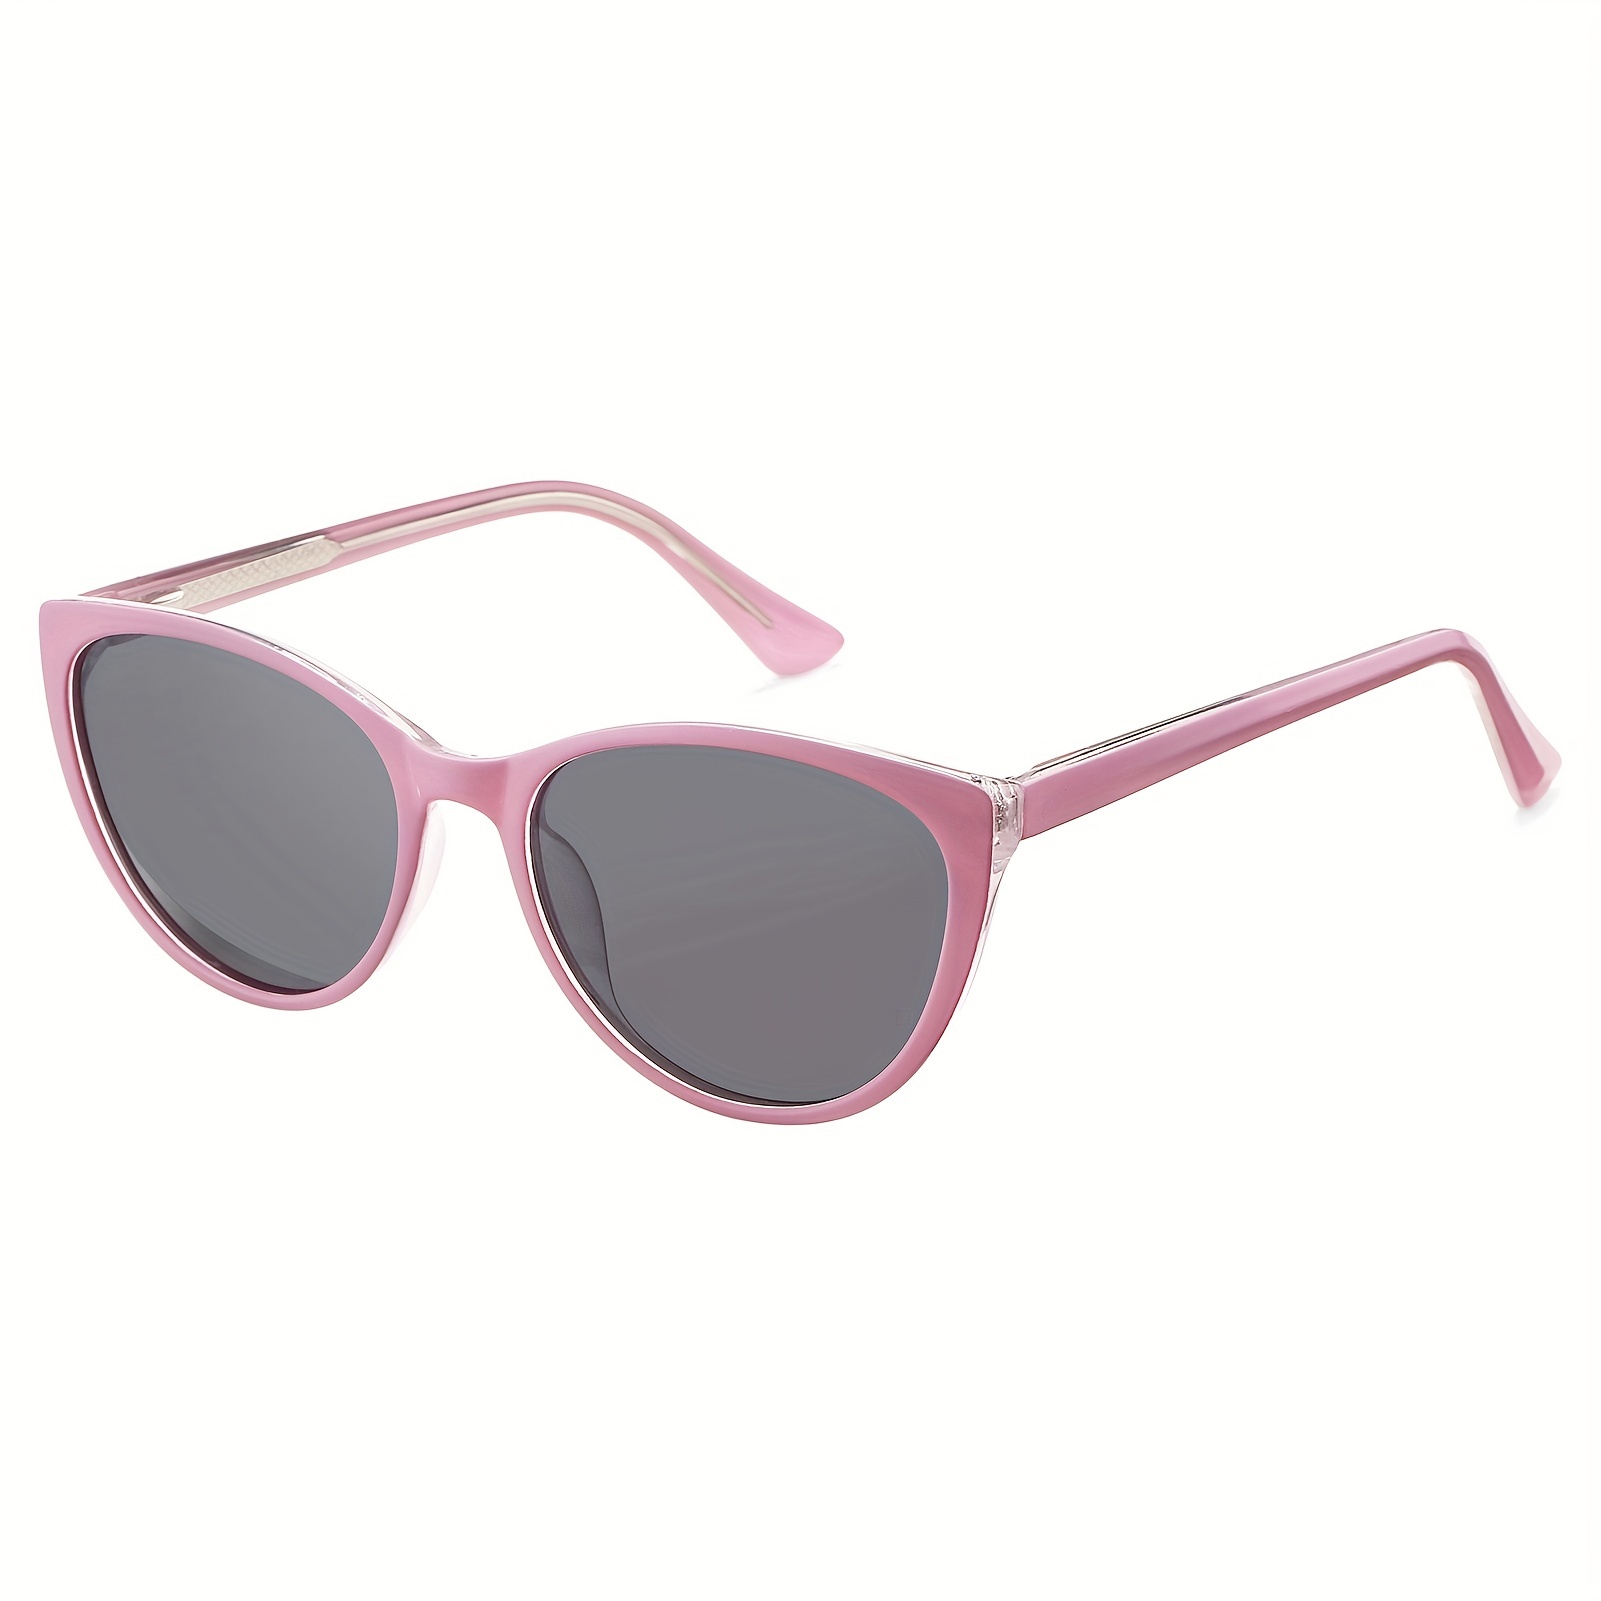 1pc Unisex Round Frame Sunglasses With Rhinestone Bowknot, Cute